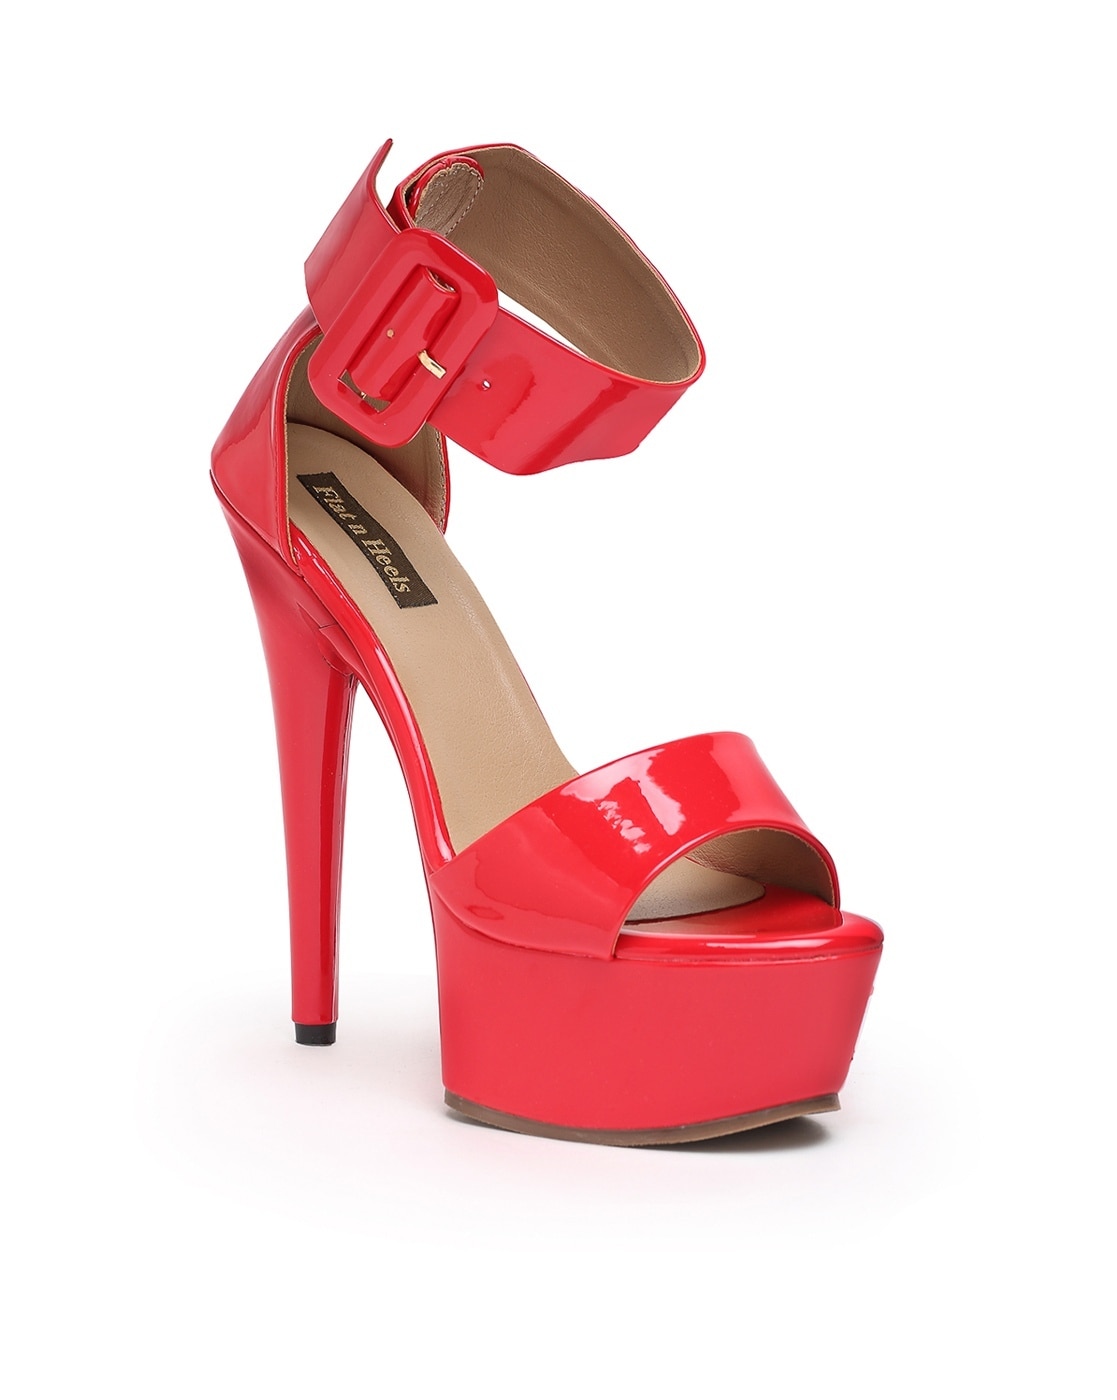 Red Heels - Red Heels Online at Best Price at Best Price | SUPERBALIST